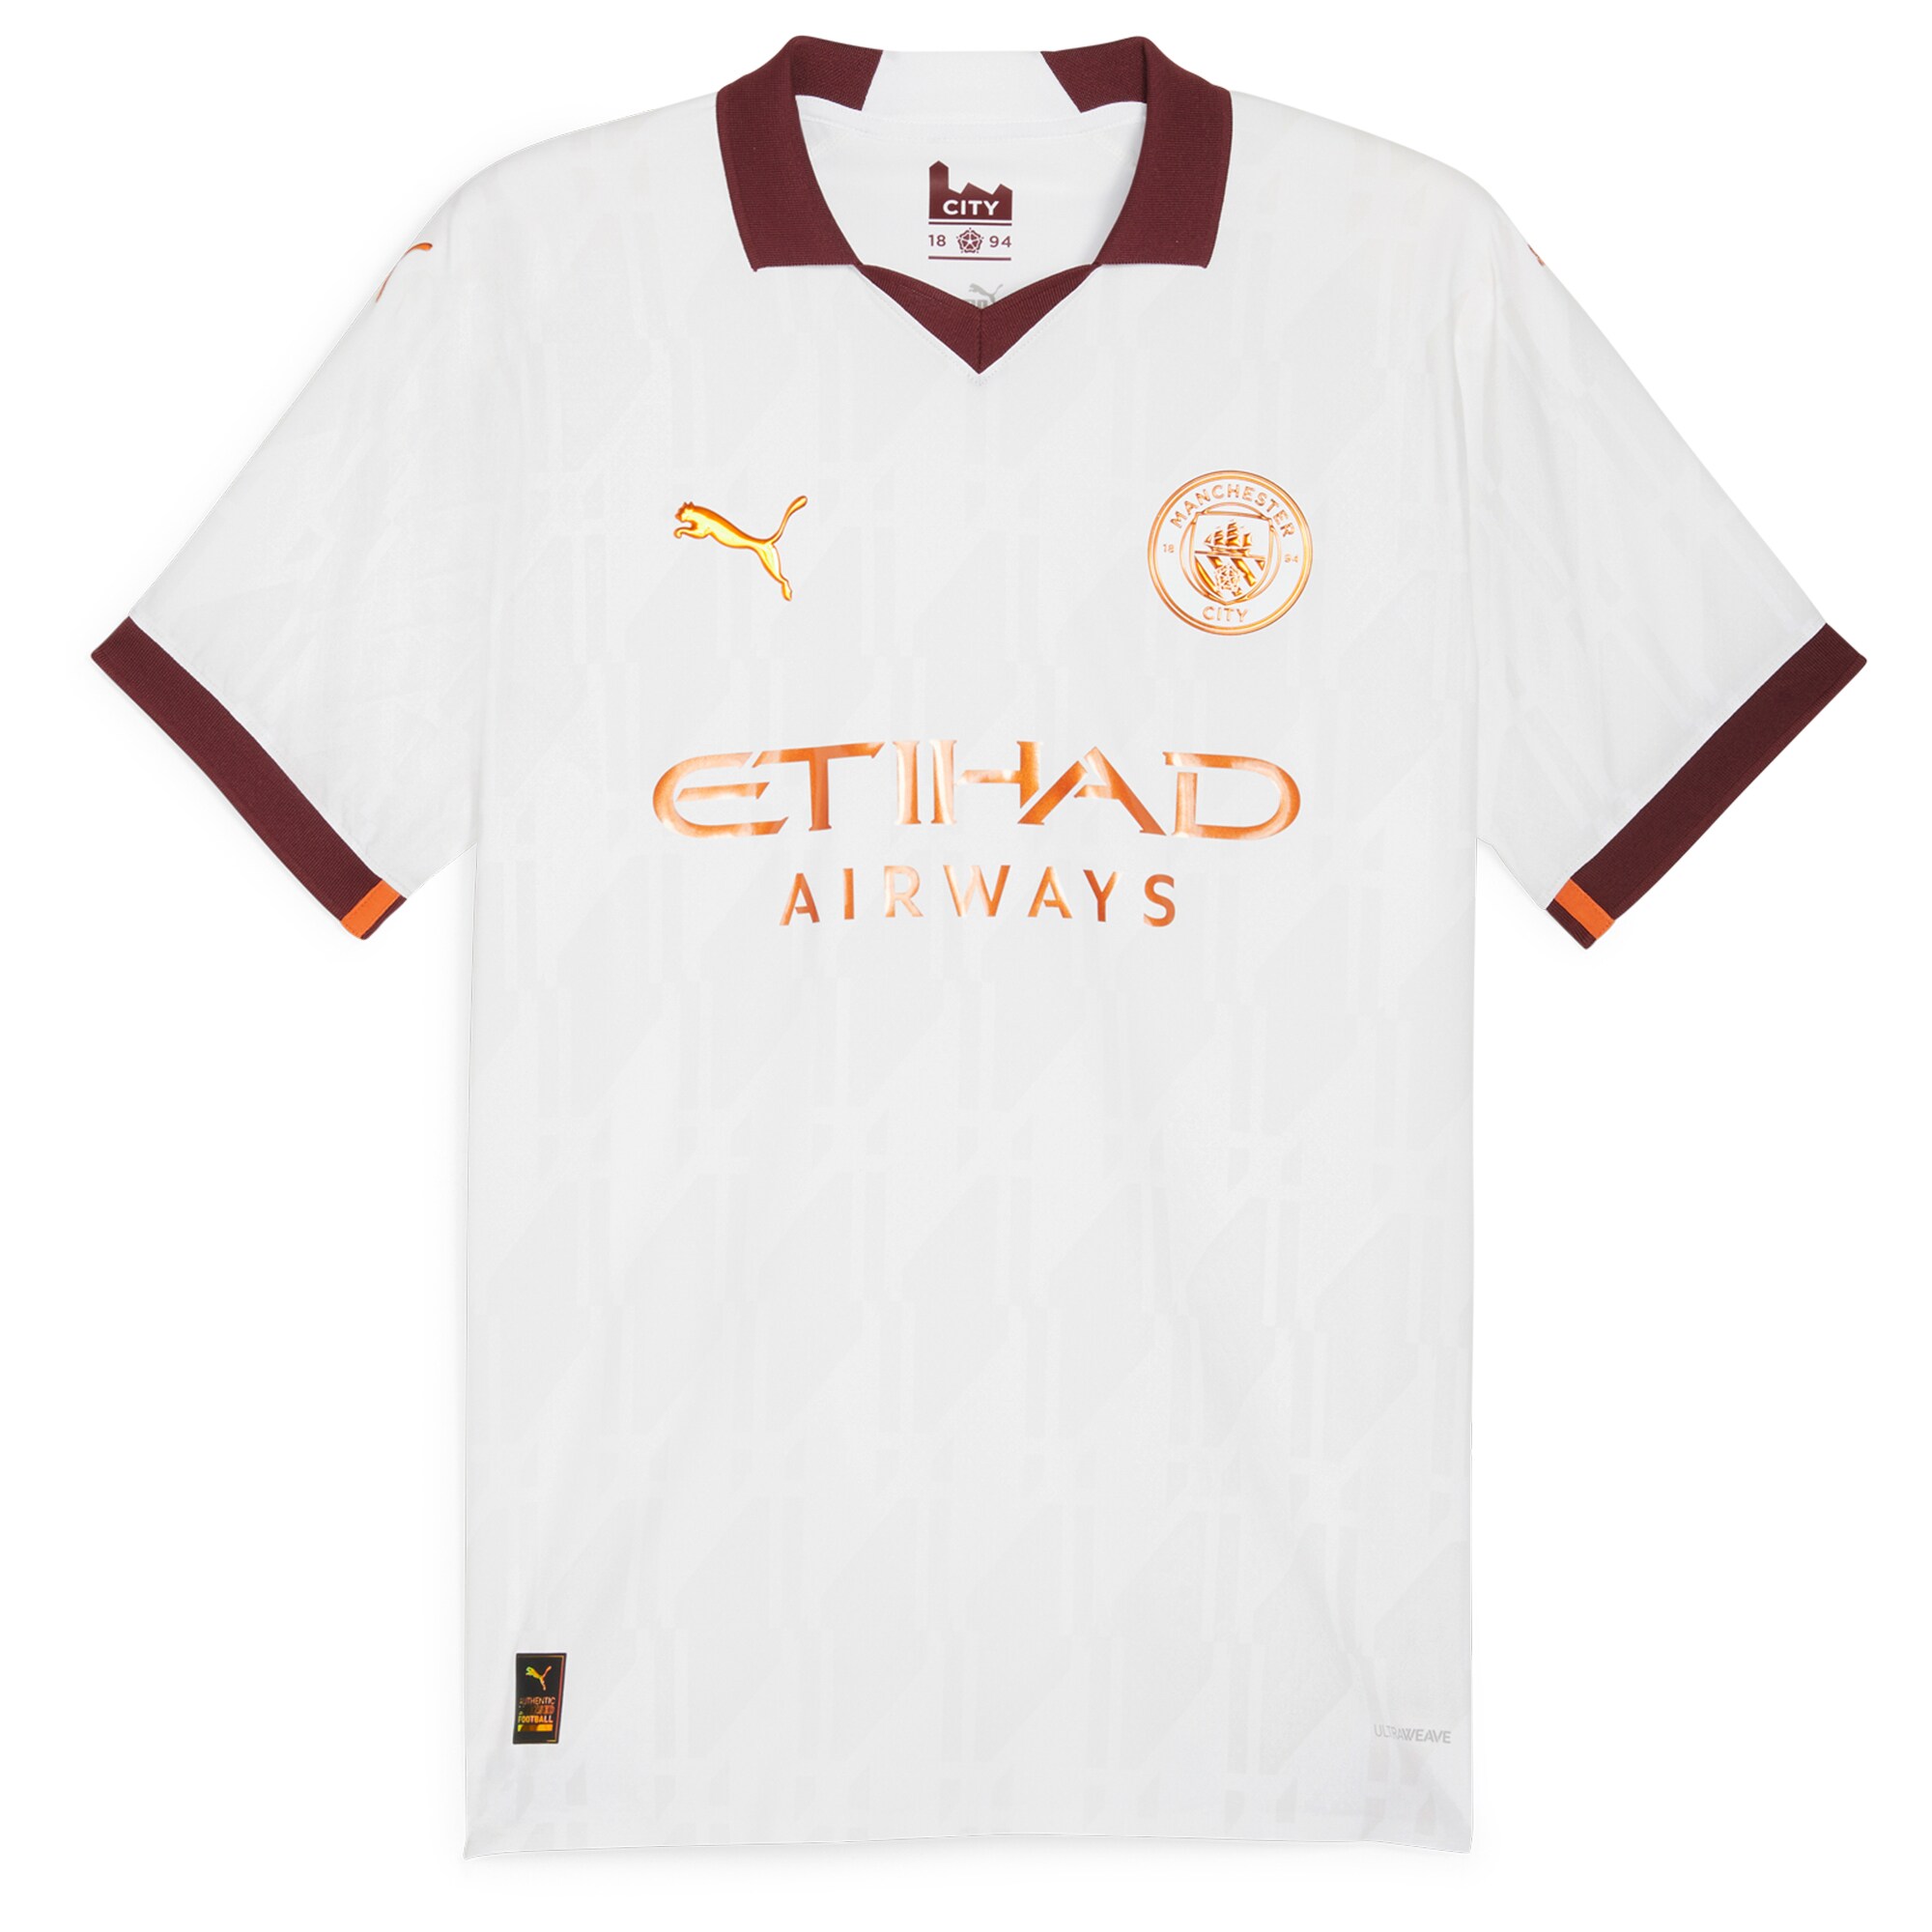 Manchester City Away Authentic Shirt 2023-24 with Bernardo 20 printing